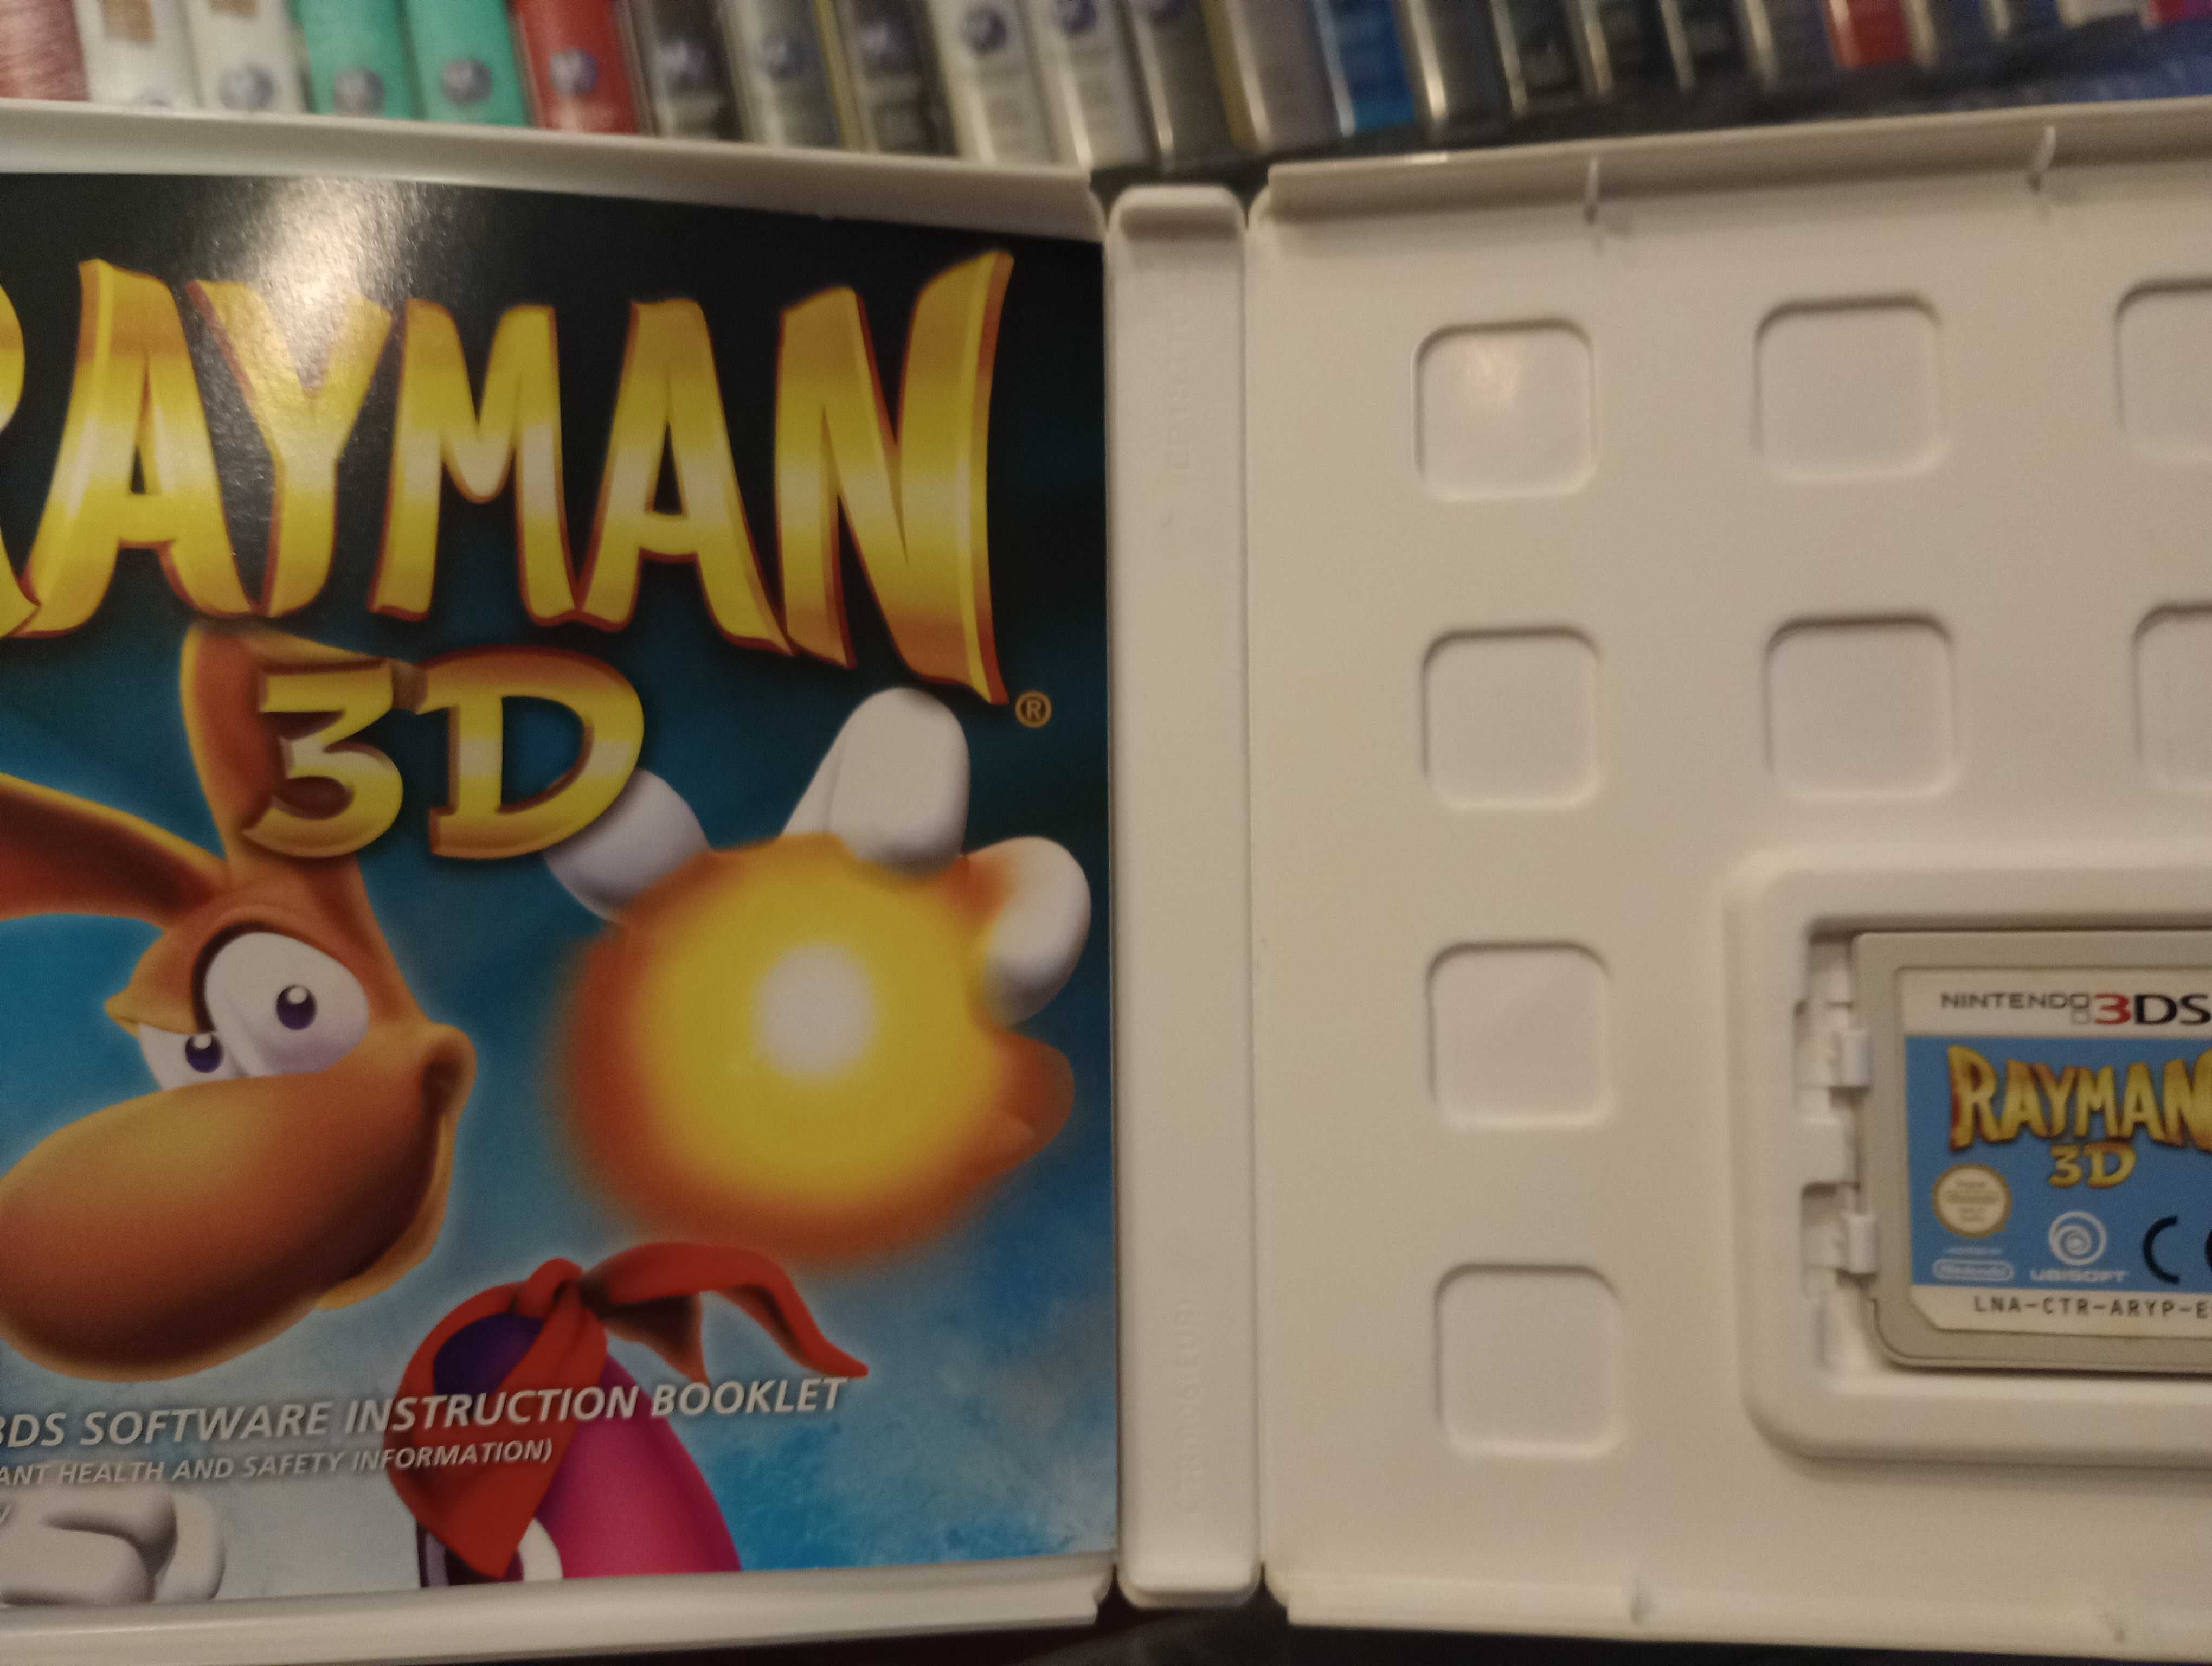 Nintendo 3DS Rayman 3D